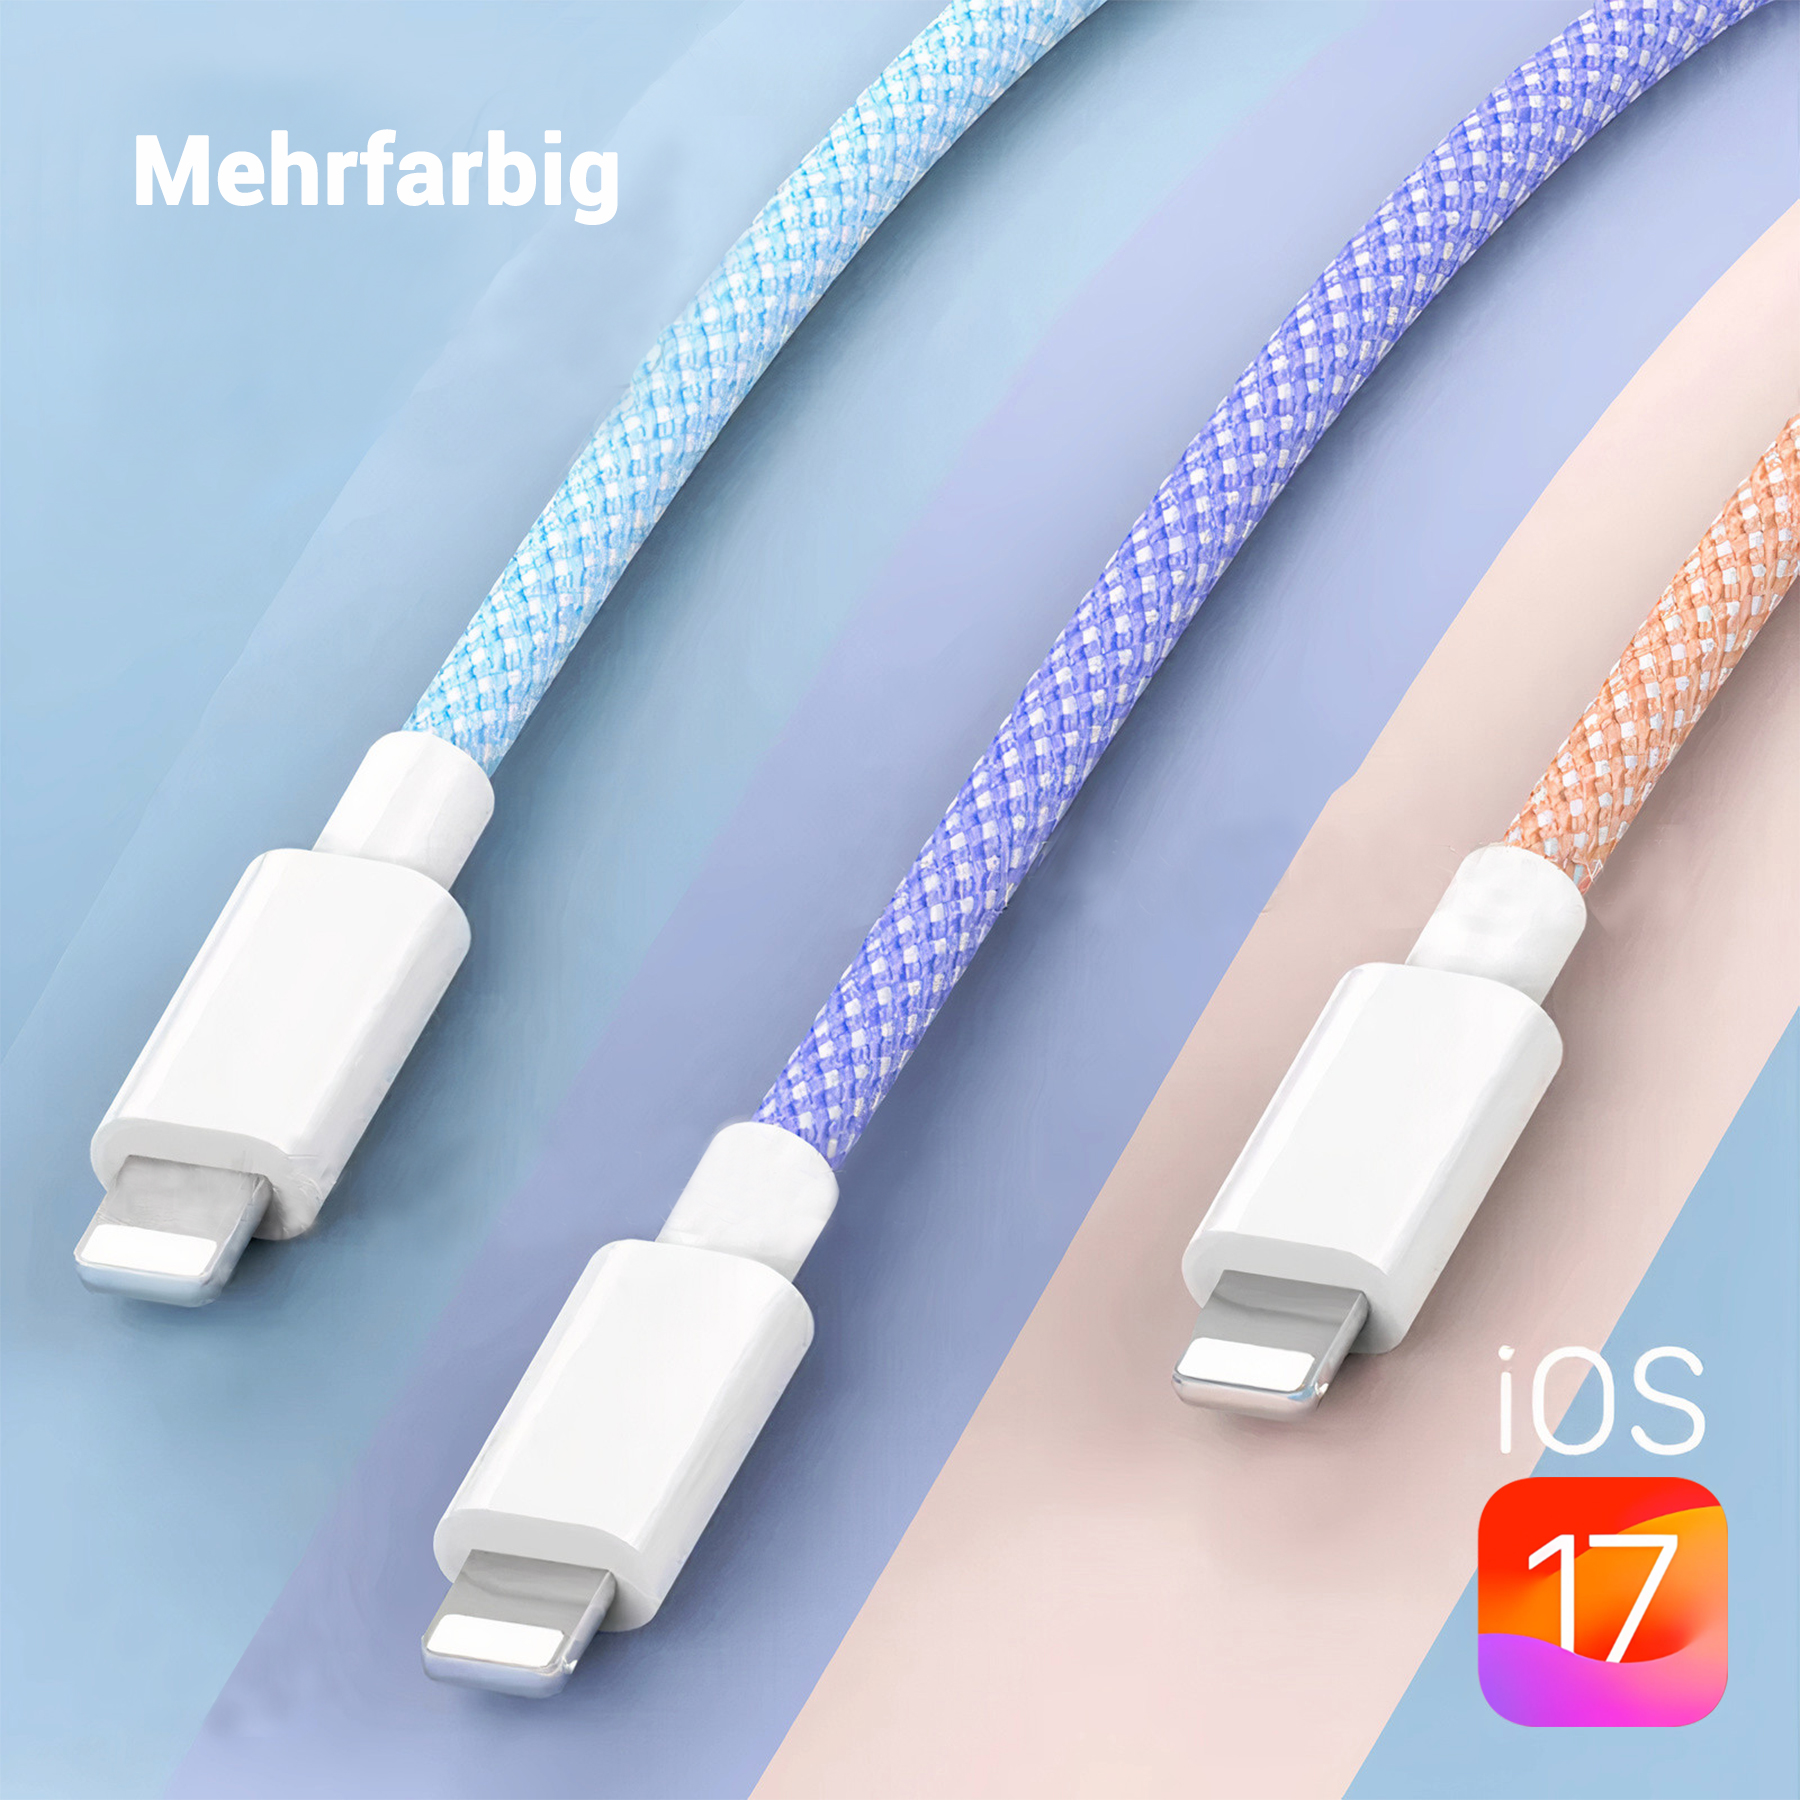 USB-C ladekabel Datenkabel, 2 USB-C iphone und Lightning Lightning Datenkabel iPhone (Orange), Kabel, Orange und ladekabel zu Apple iphone m, XTREMES